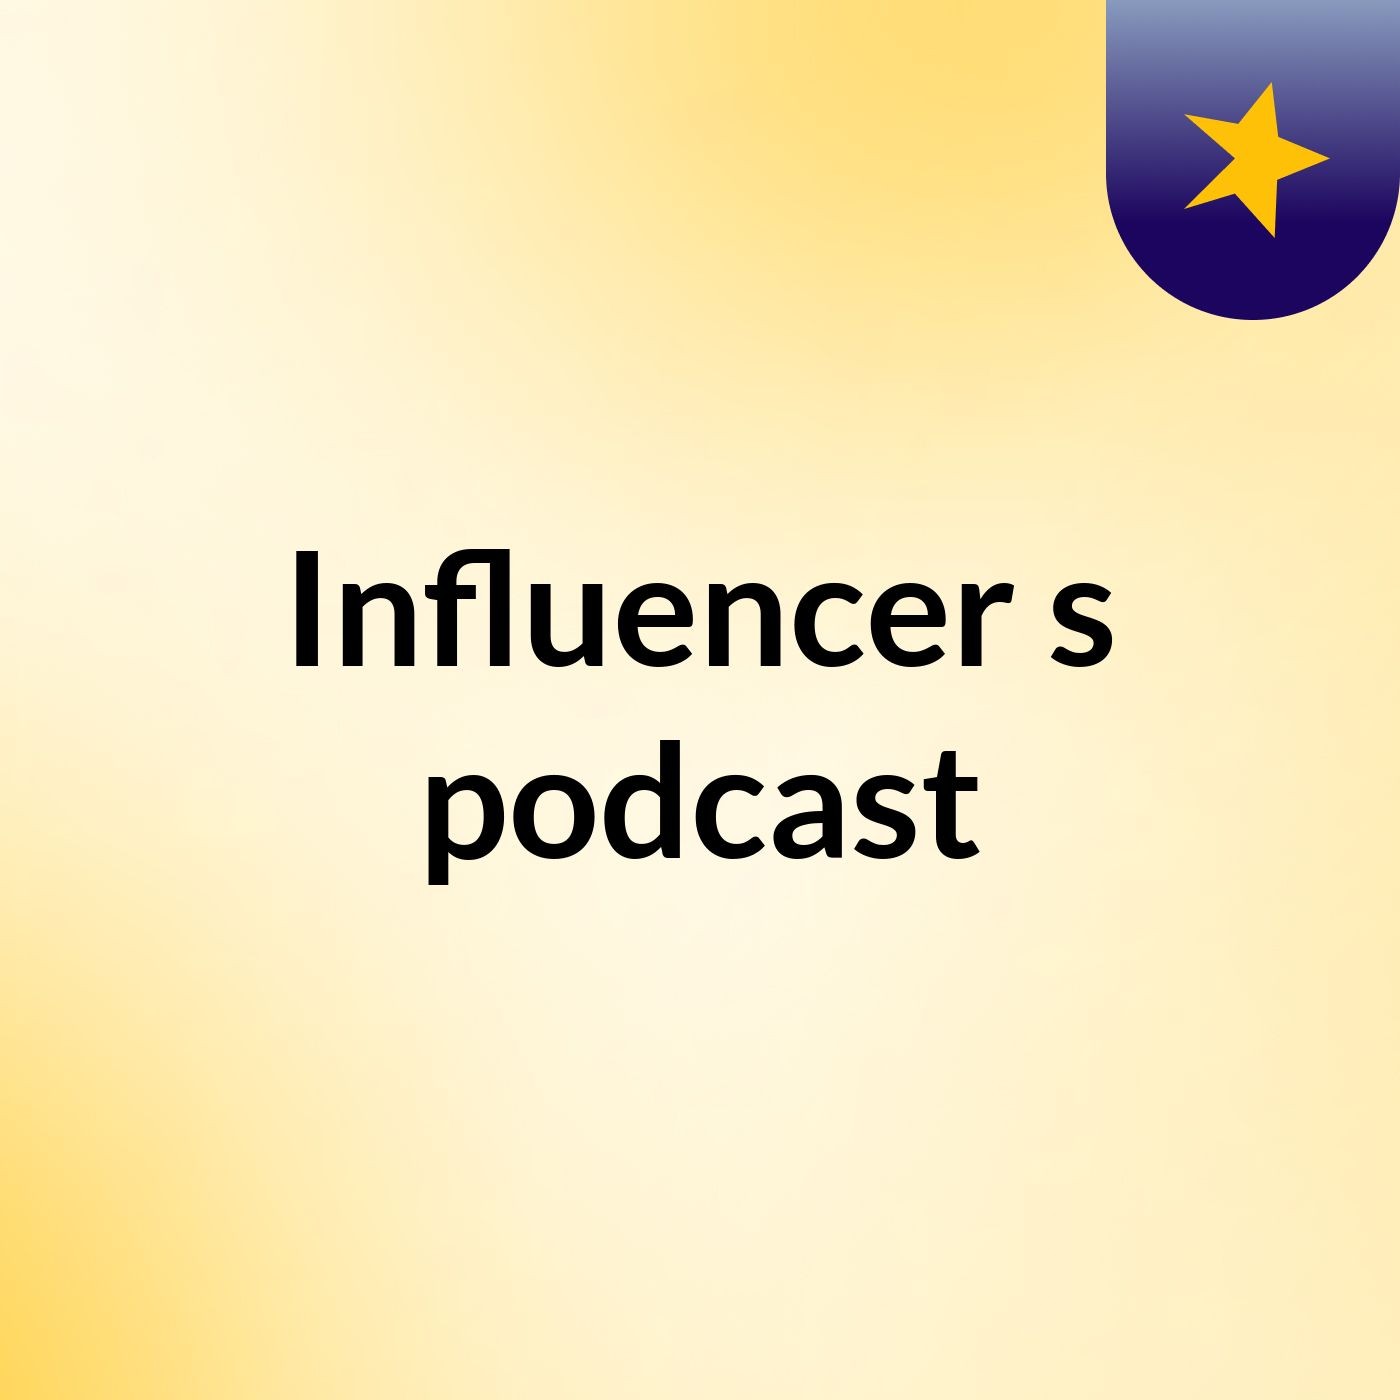 Episode 10 - Influencer's podcast